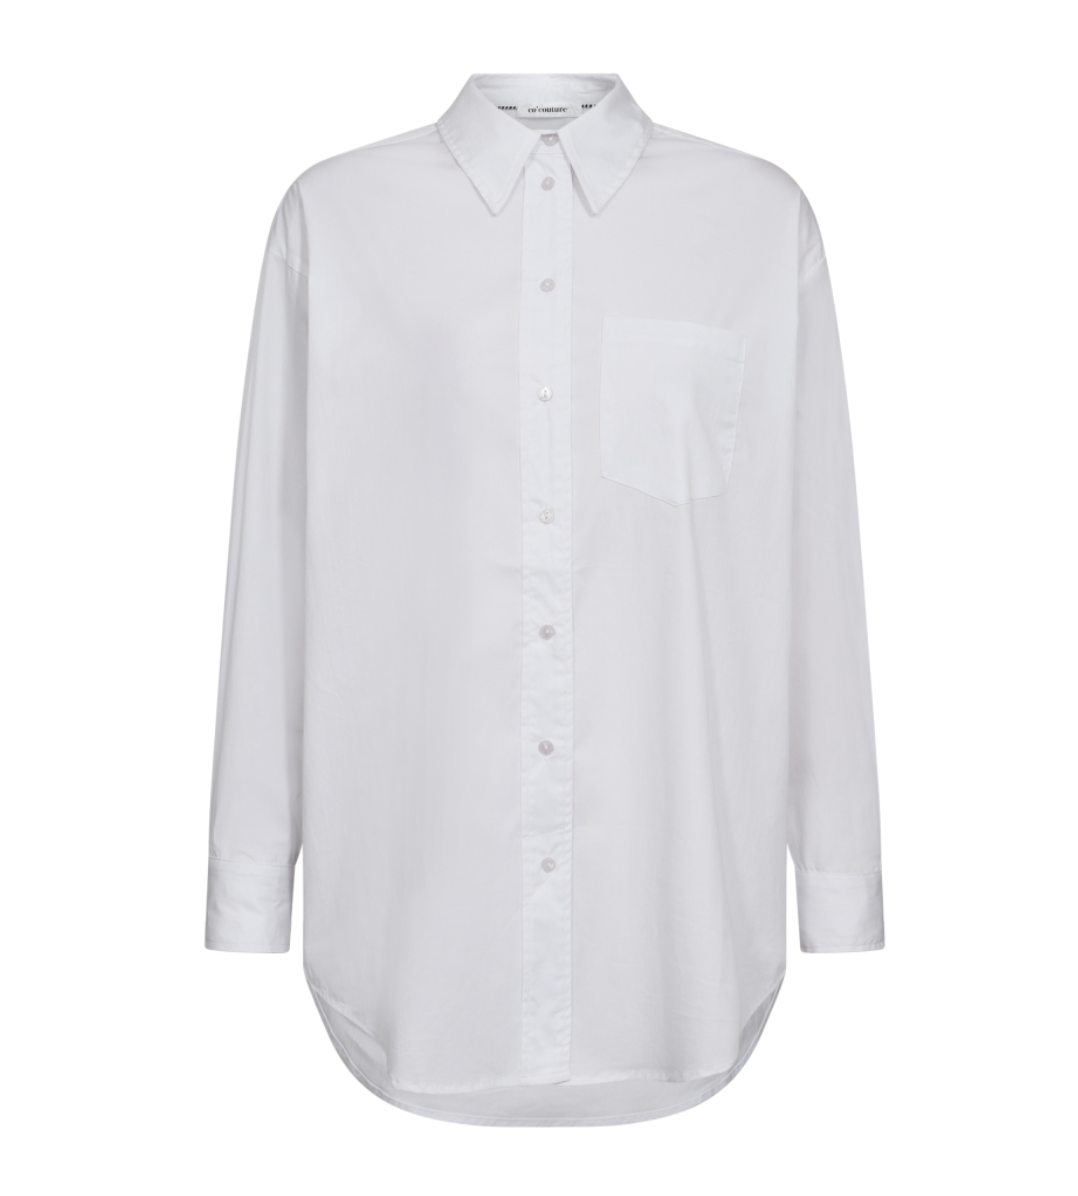 Cotton Crisp Oversized Shirt (7690403381445)